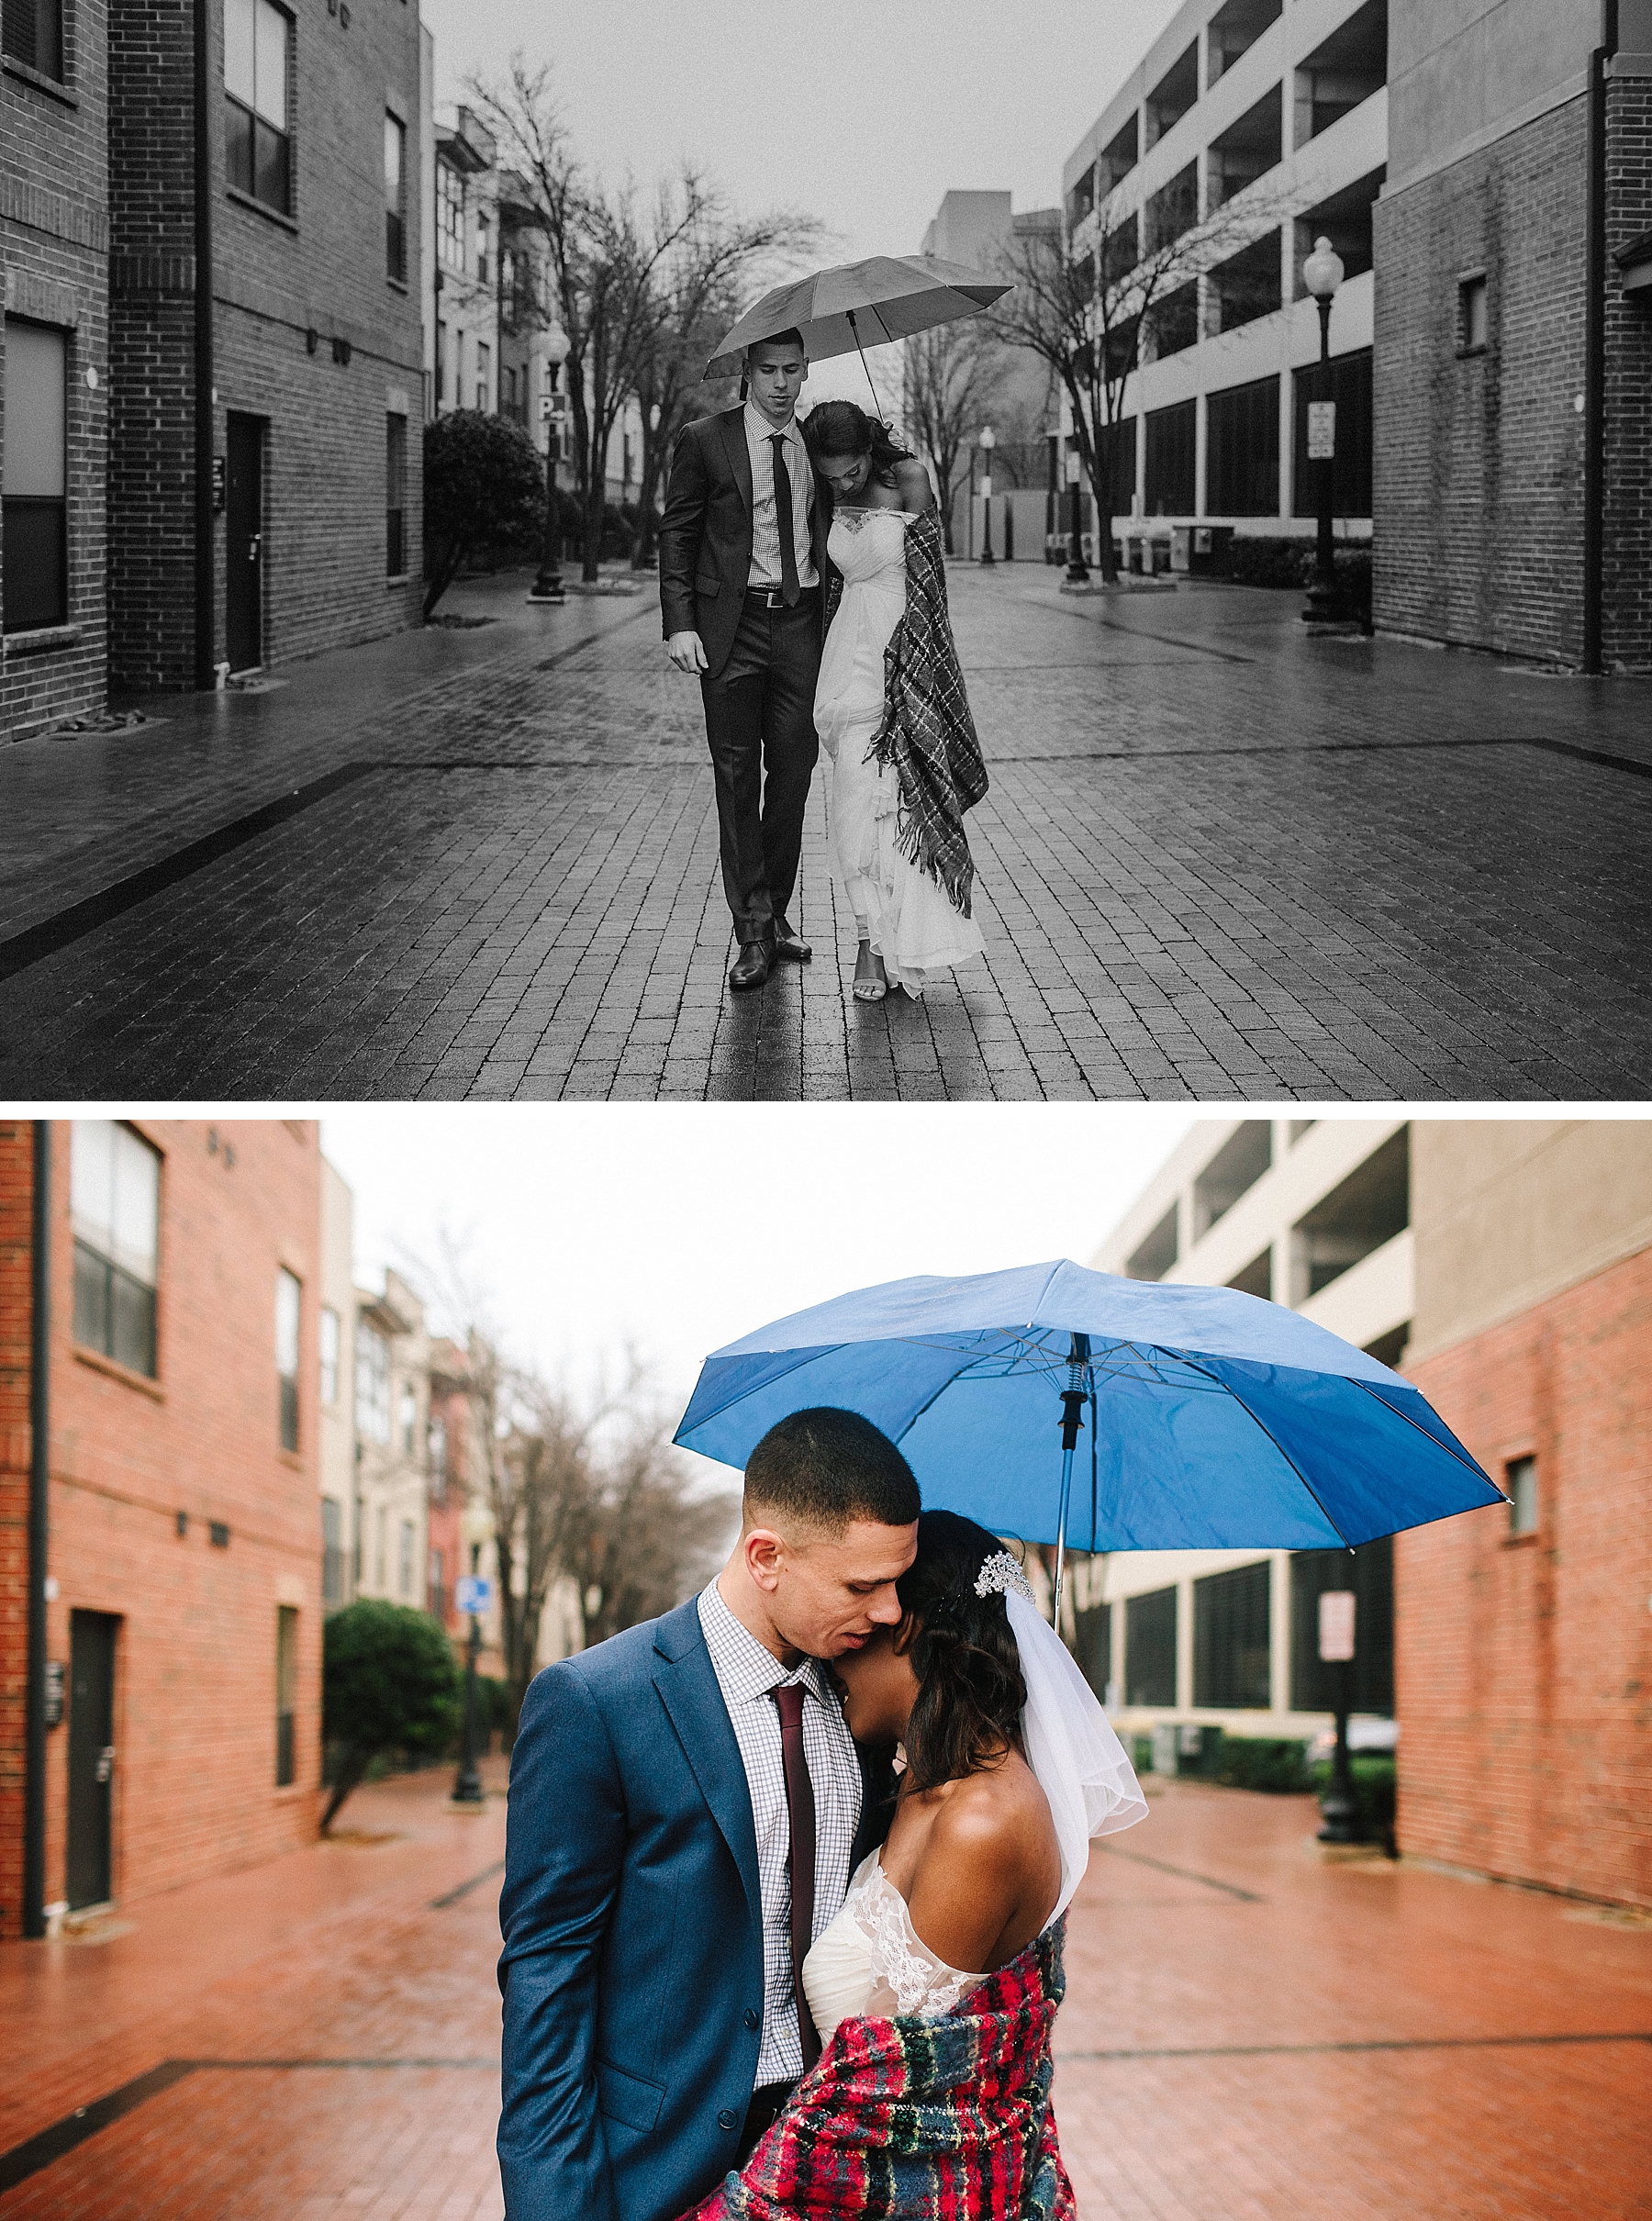 umbrella at rainy wedding day